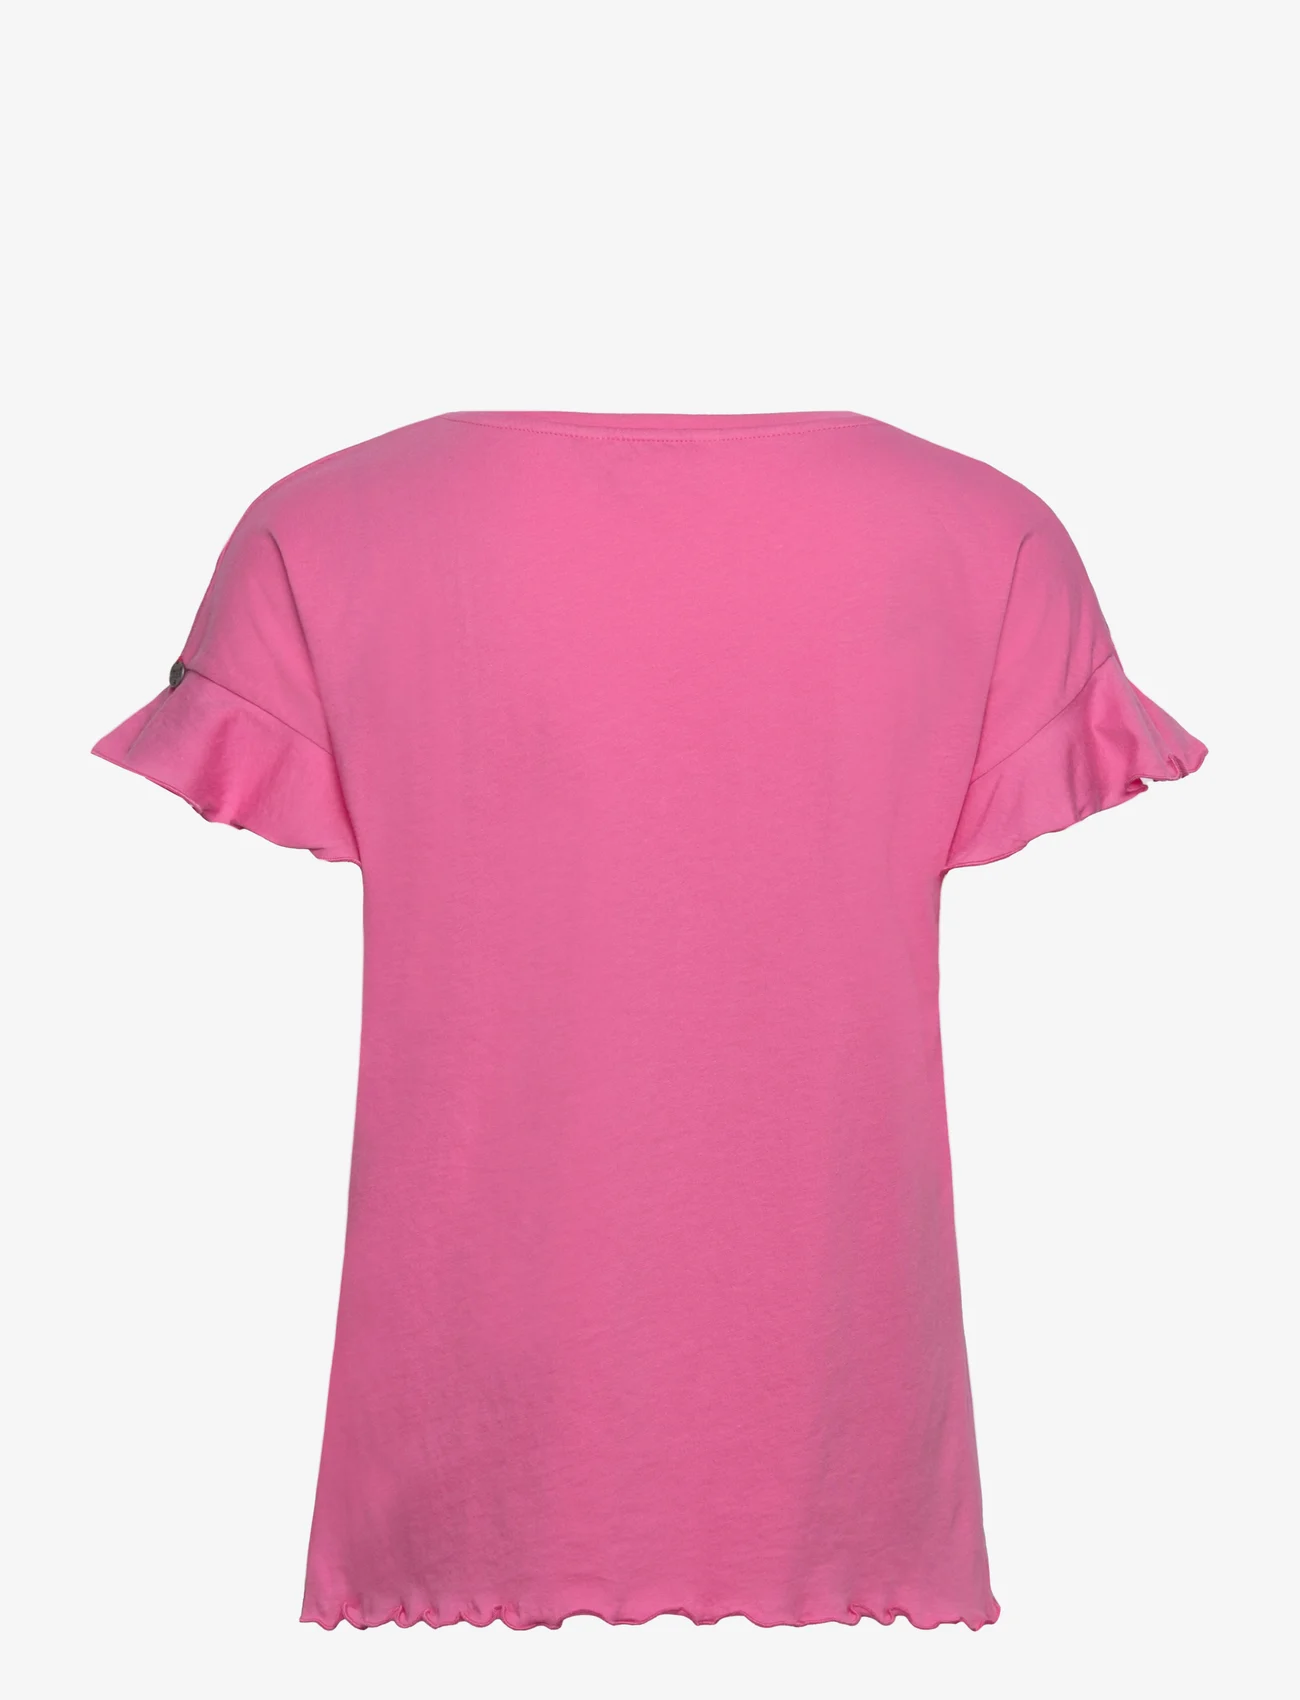 ODD MOLLY - Camellia Top - t-shirts & tops - azalea pink - 1